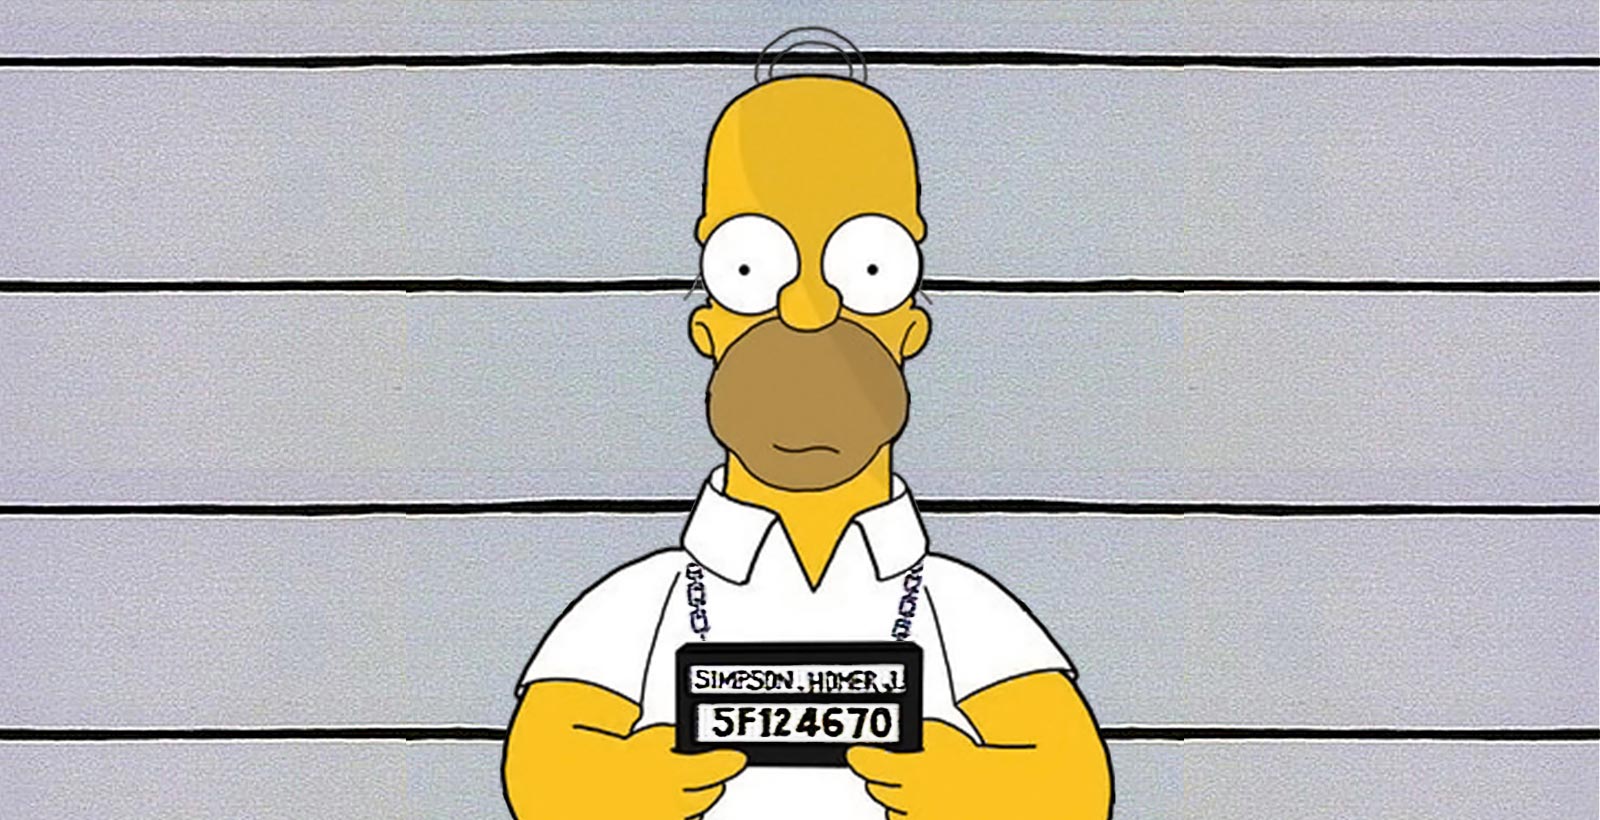 Si Making a Murderer racontait l’histoire d’Homer Simpson. 